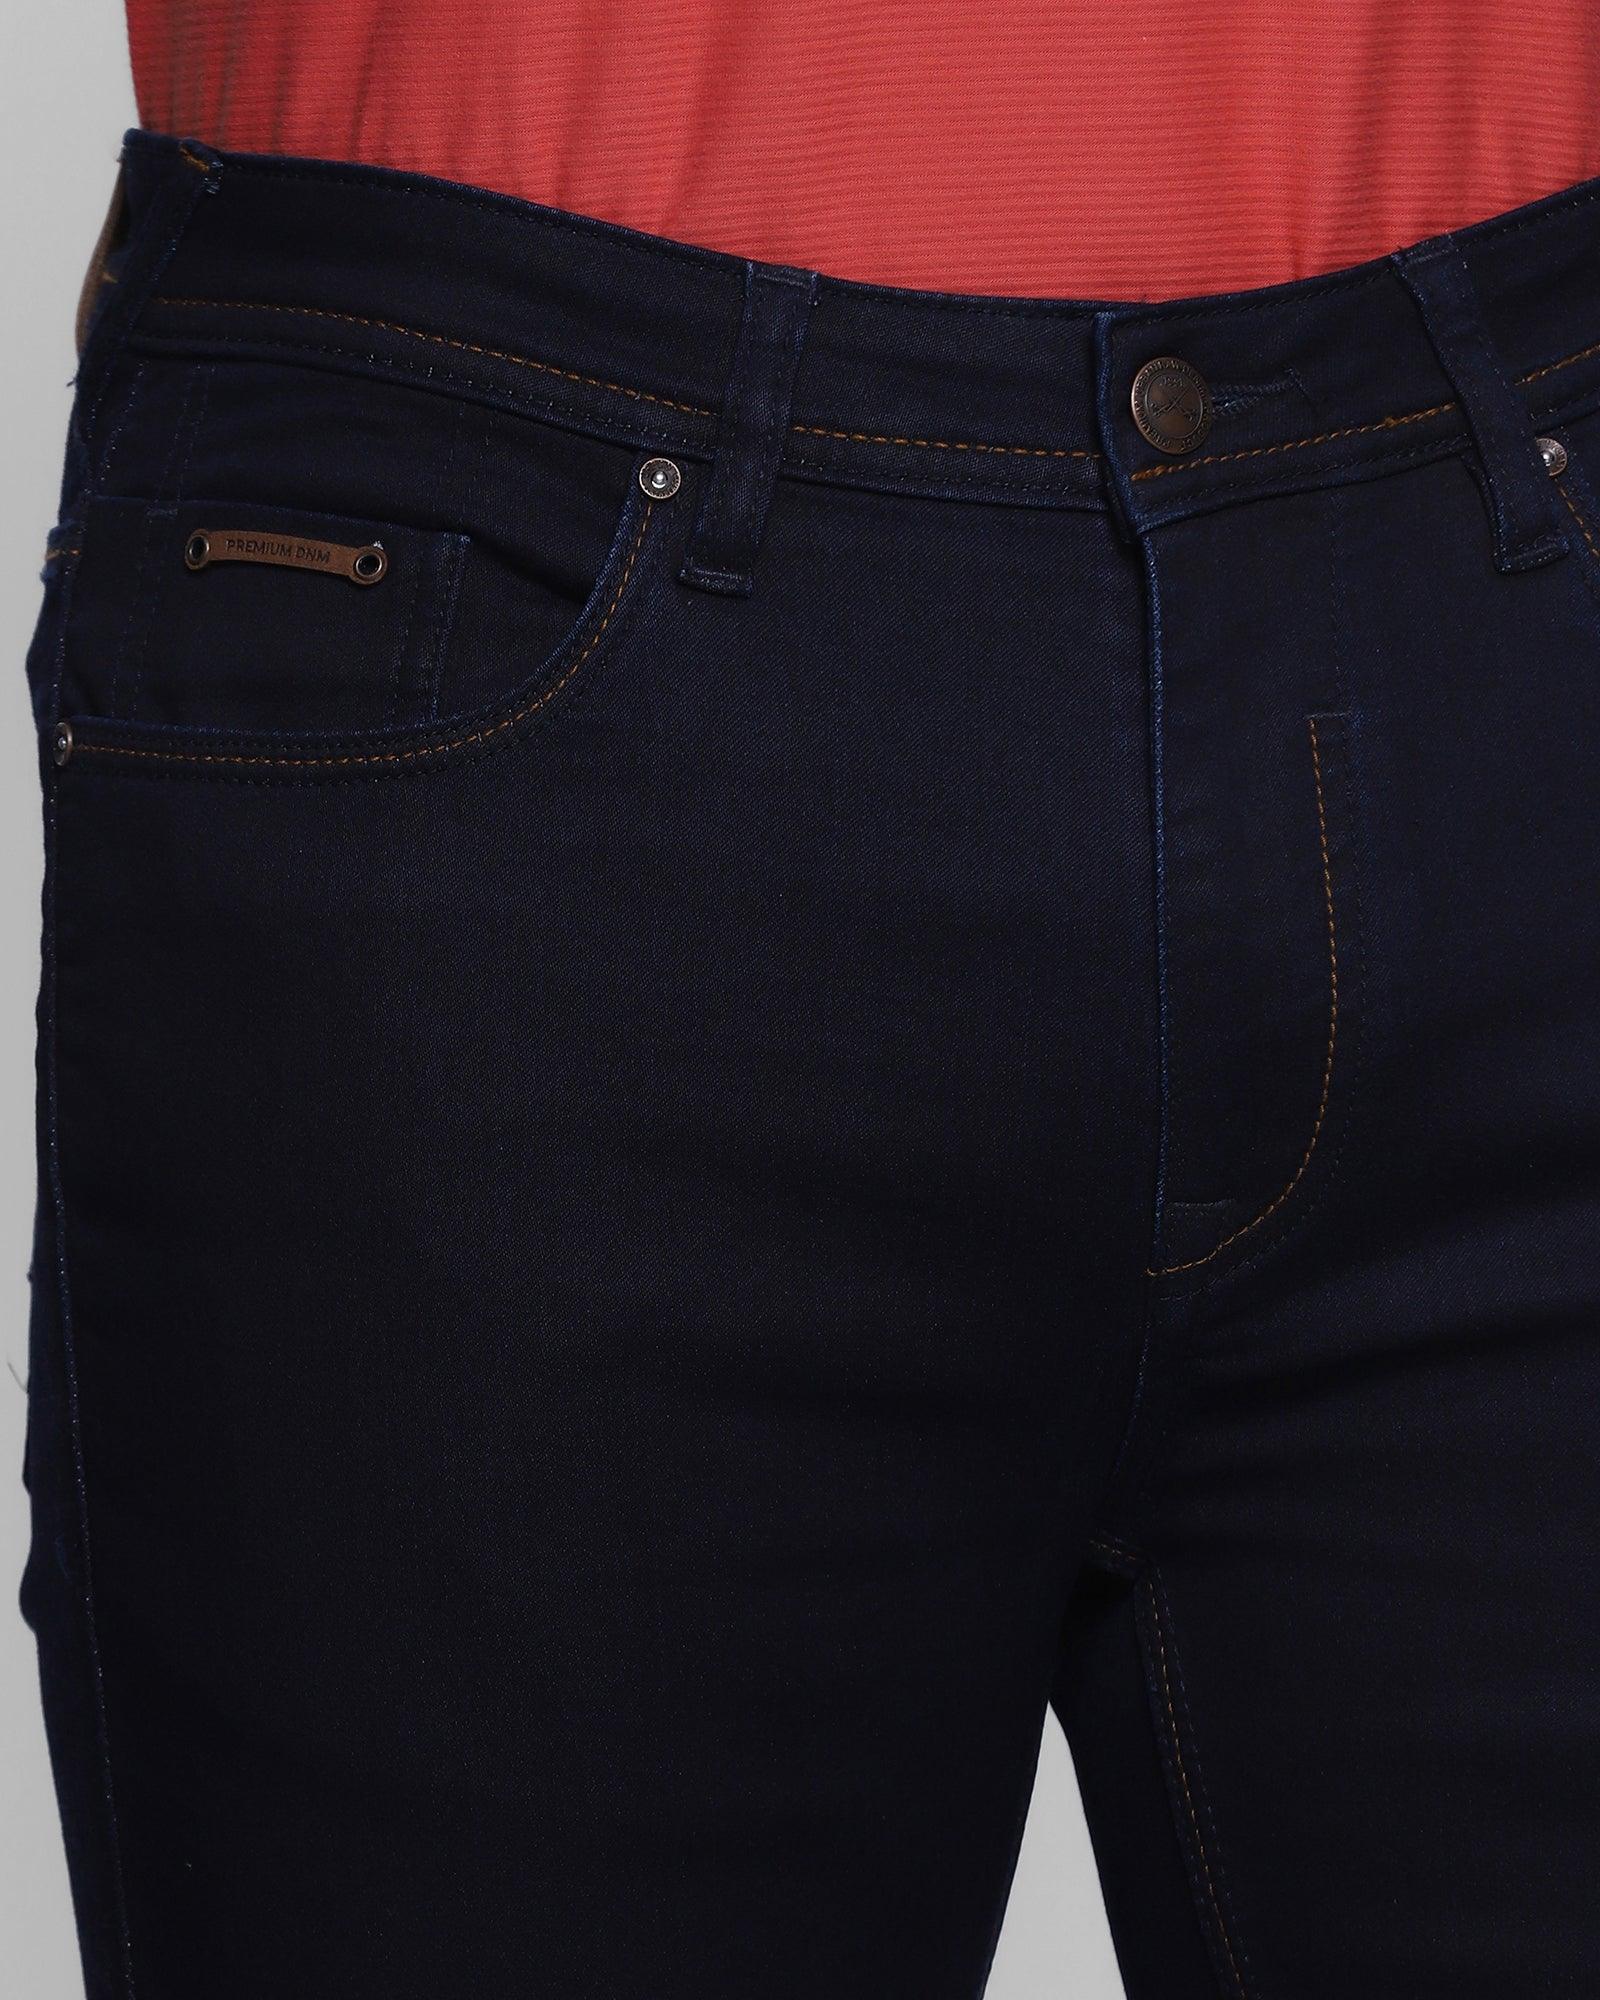 Ultrasoft Slim Yonk Fit Indigo Jeans - Pint